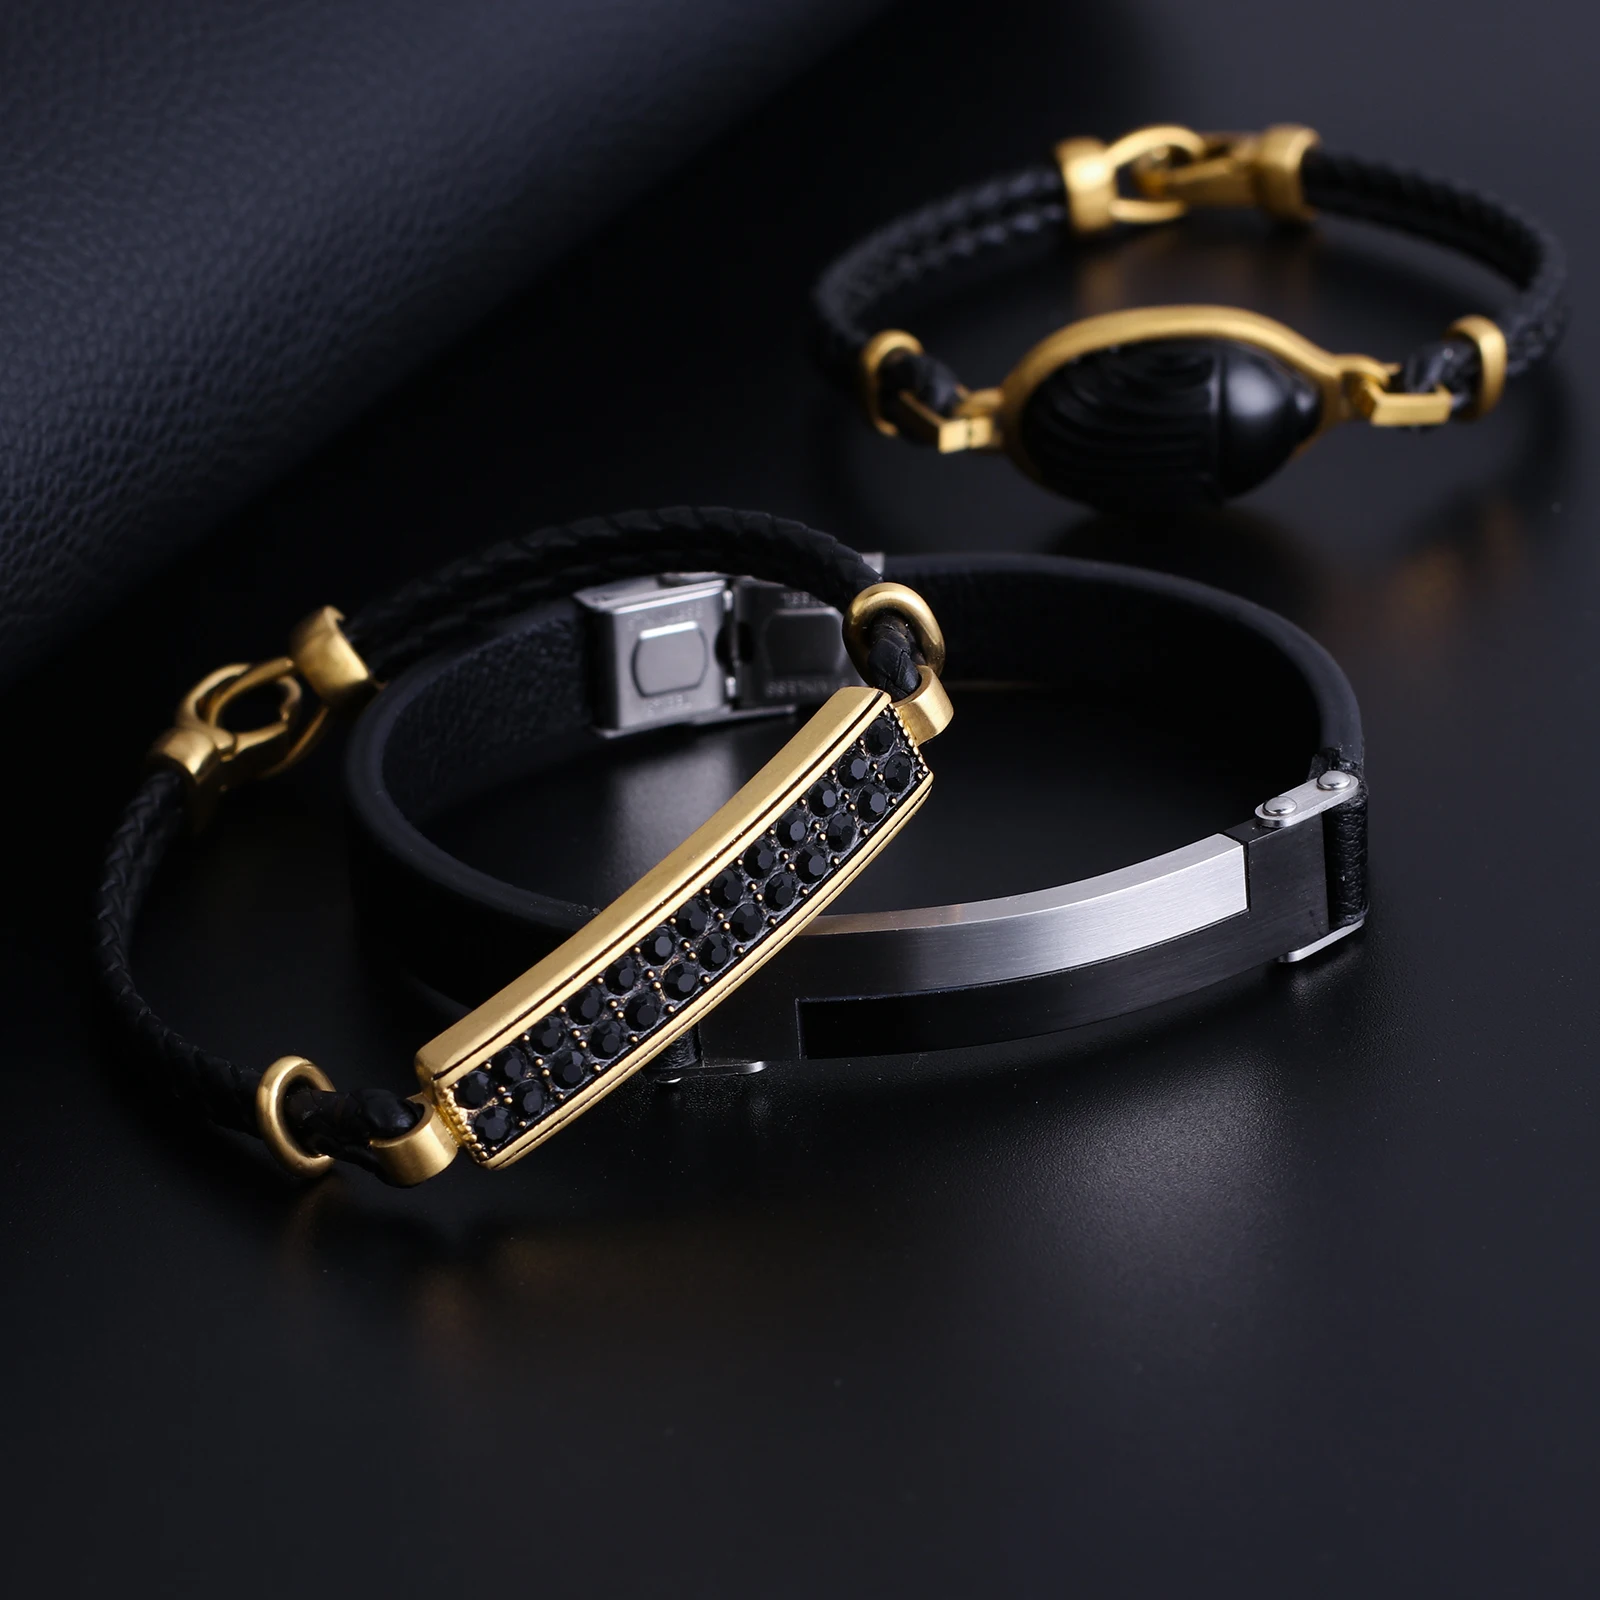 High Quality Luxury Custom Set Male Stainless Steel Clasp Black Braided Cord Handmade Rope Genuine Leather Bracelet For Men